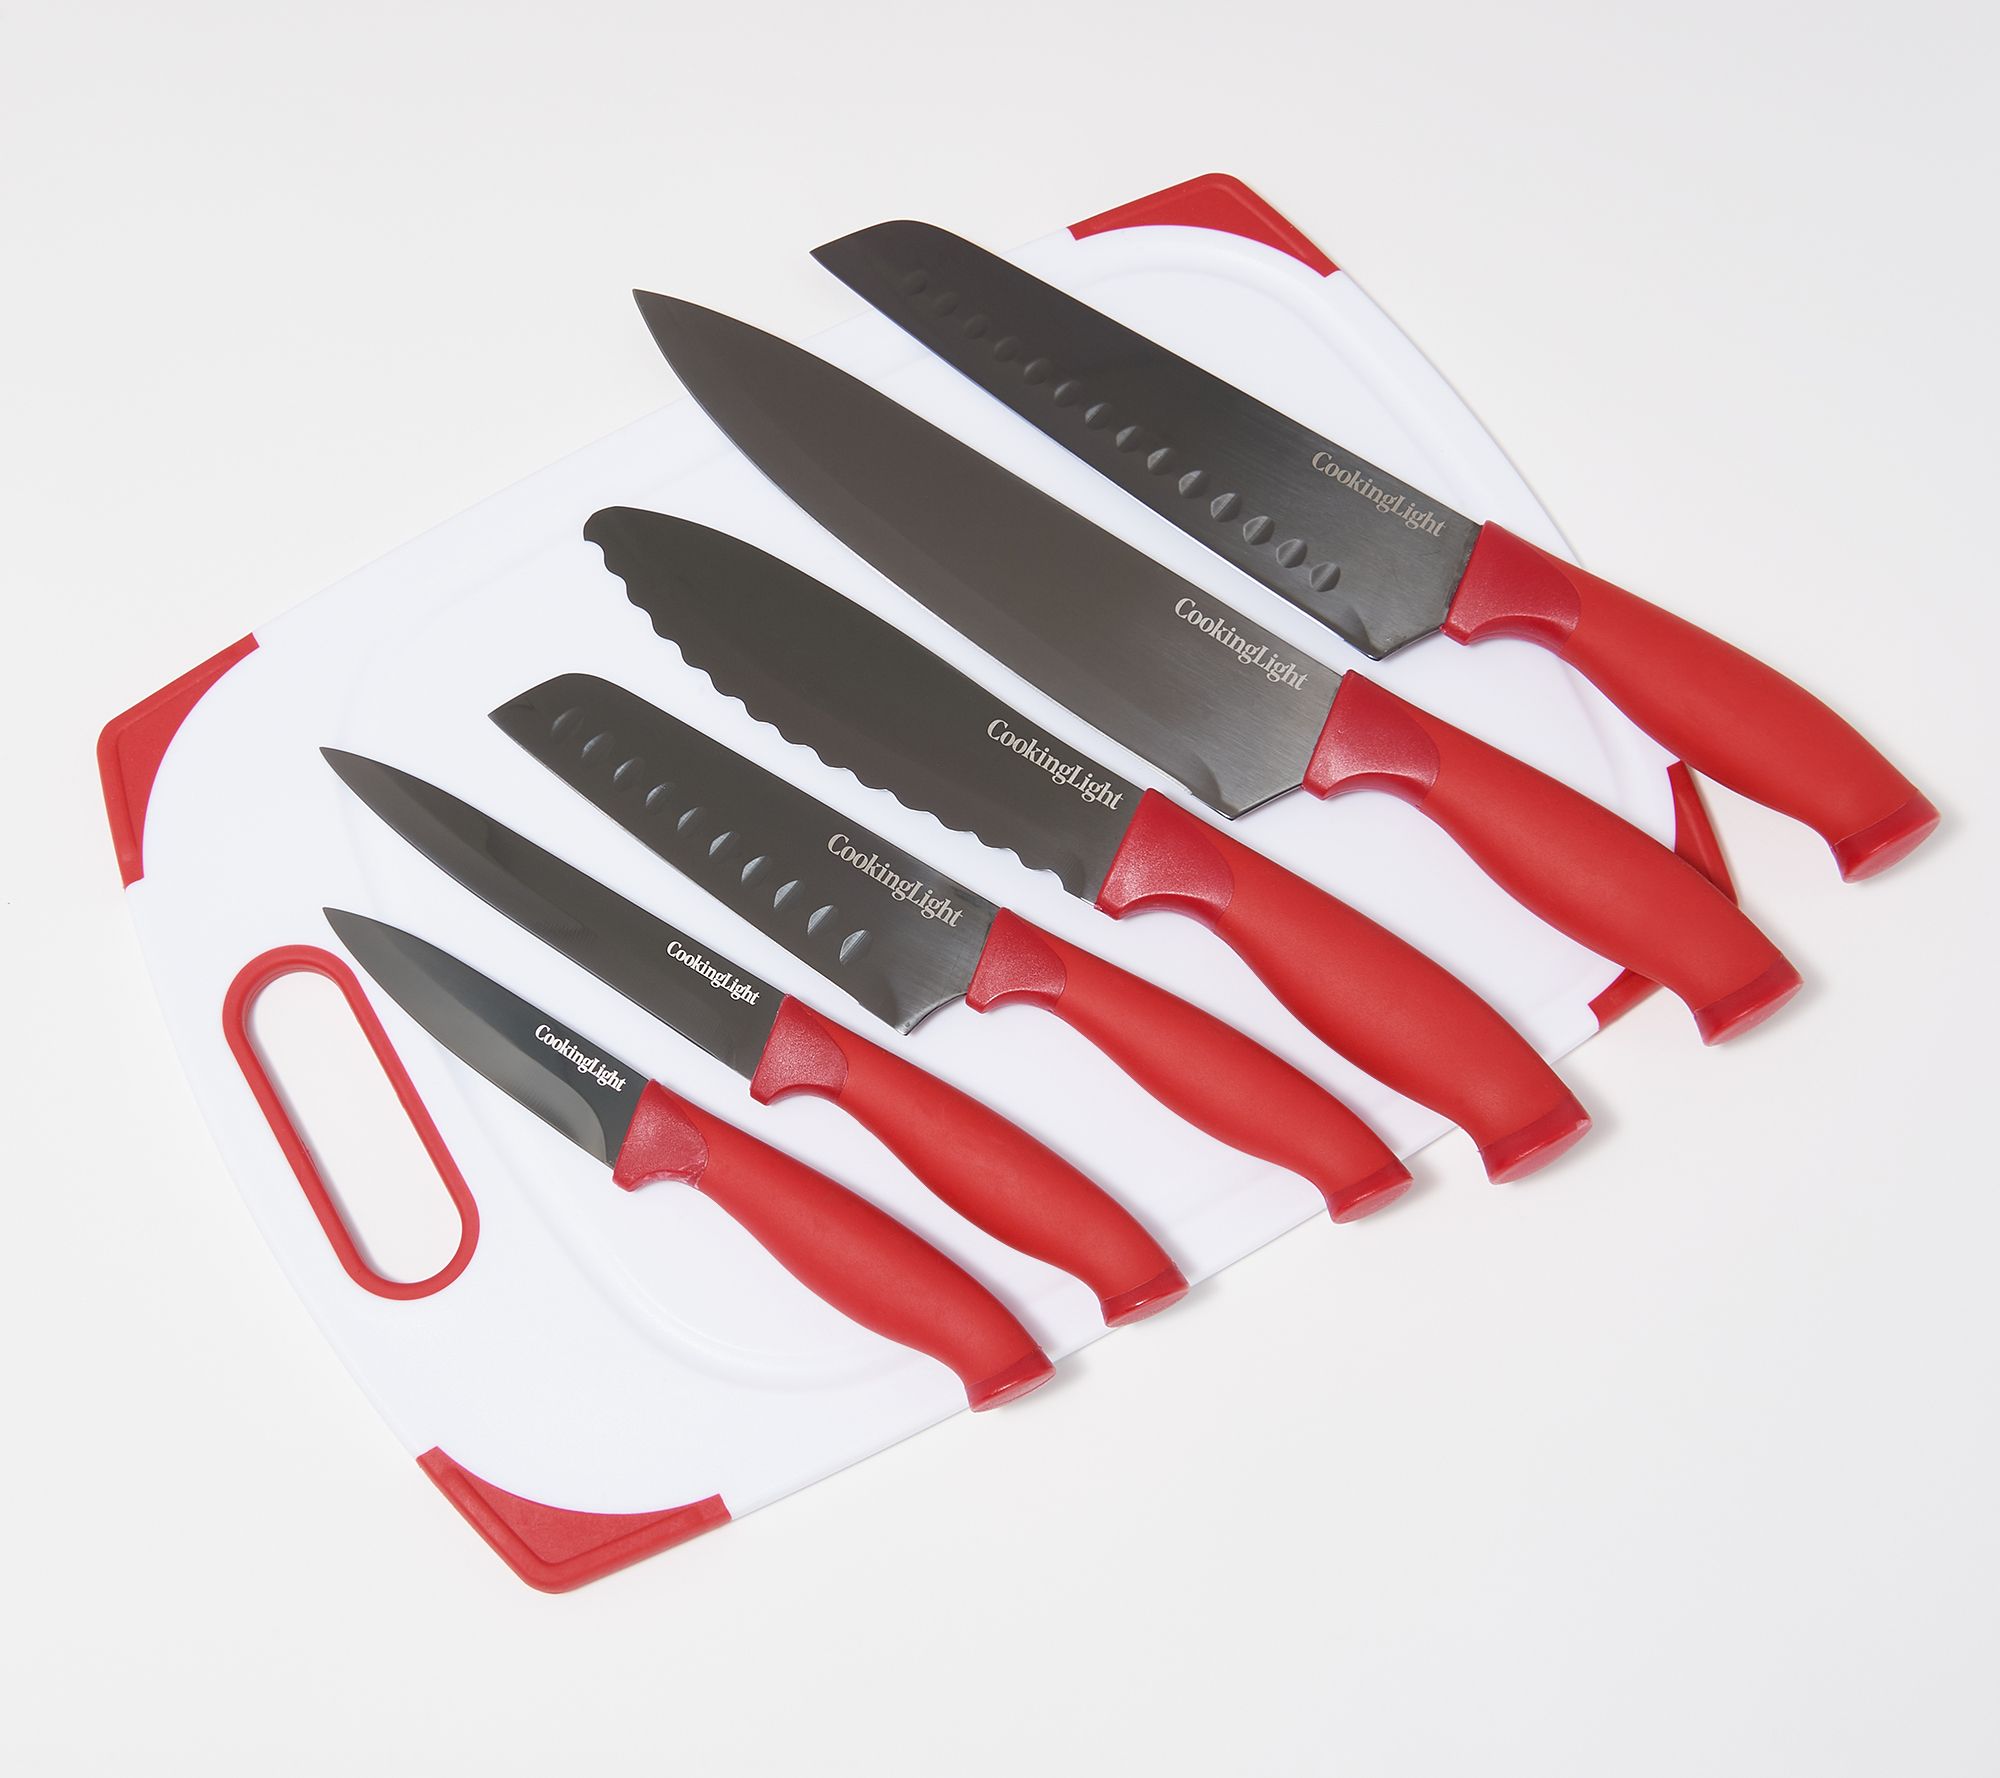 Cuisinart 11-Piece Cutlery Set and Cutting Board (Black)